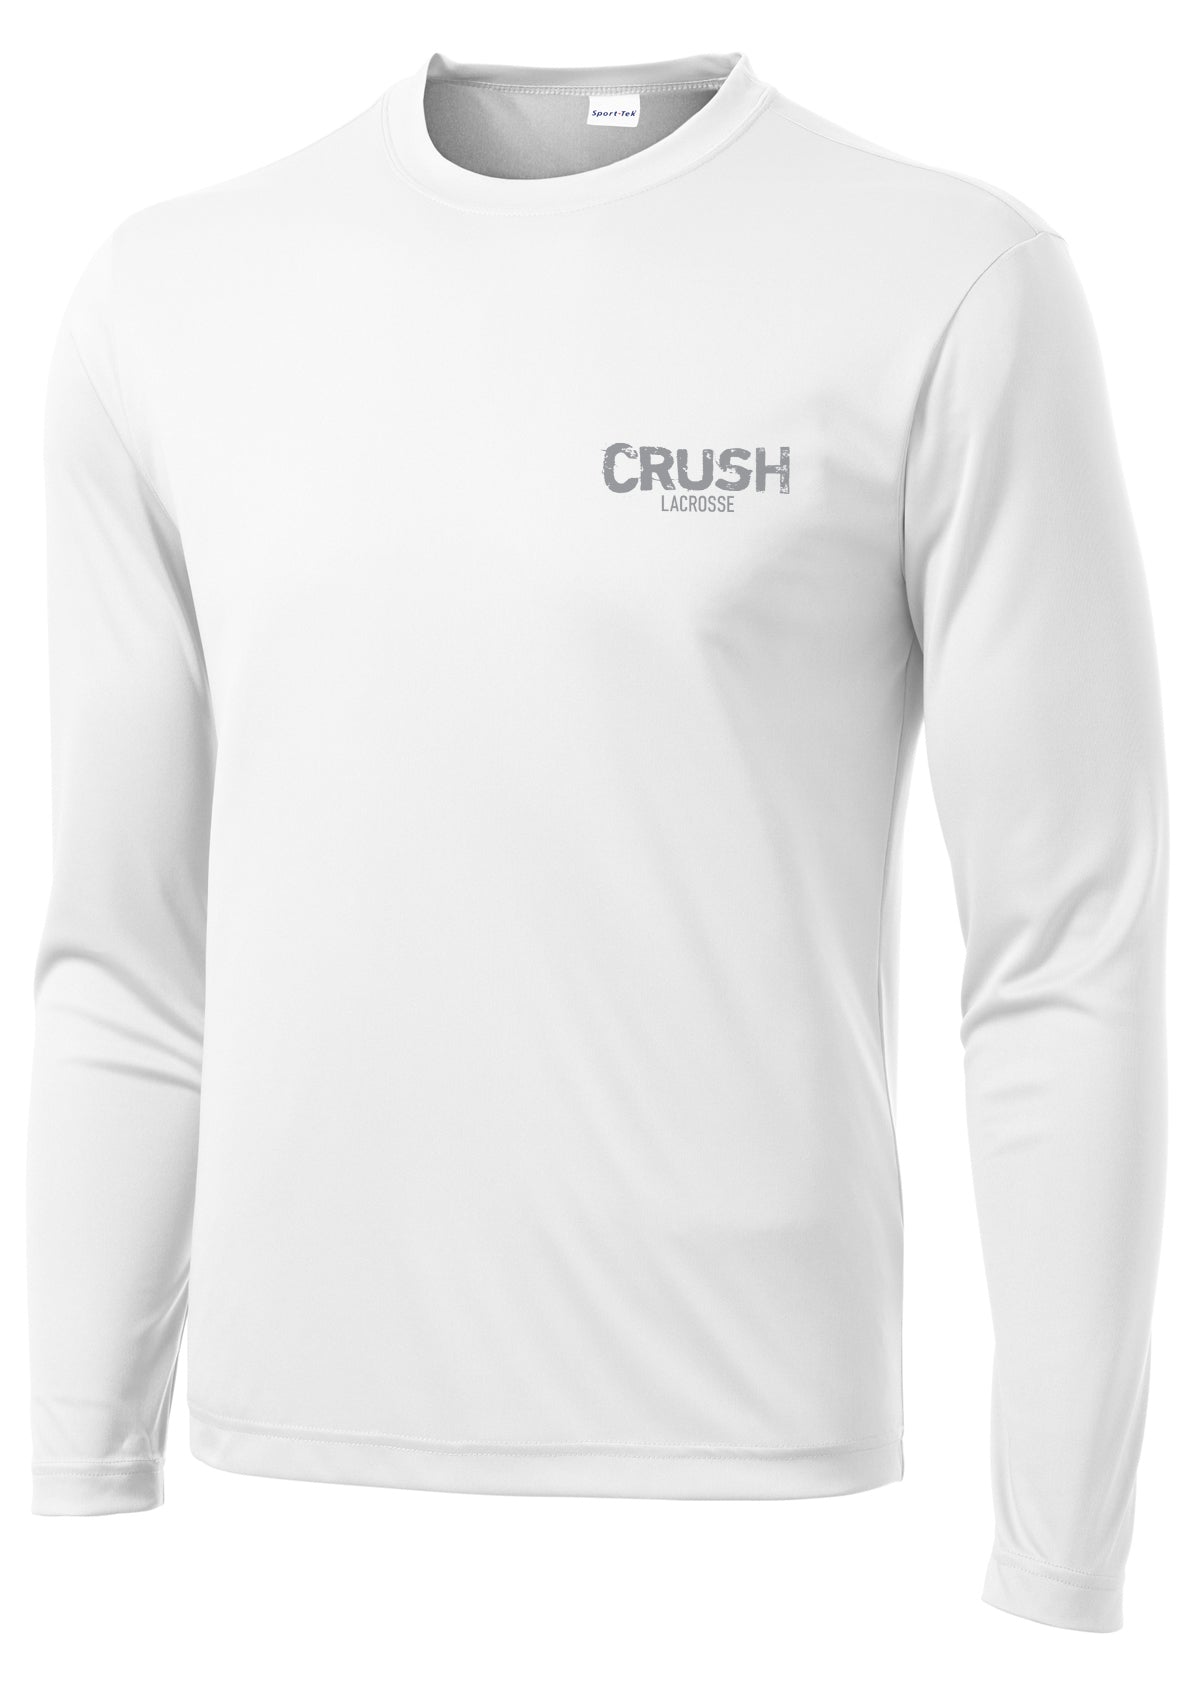 Crush Lacrosse White Long Sleeve Performance Shirt